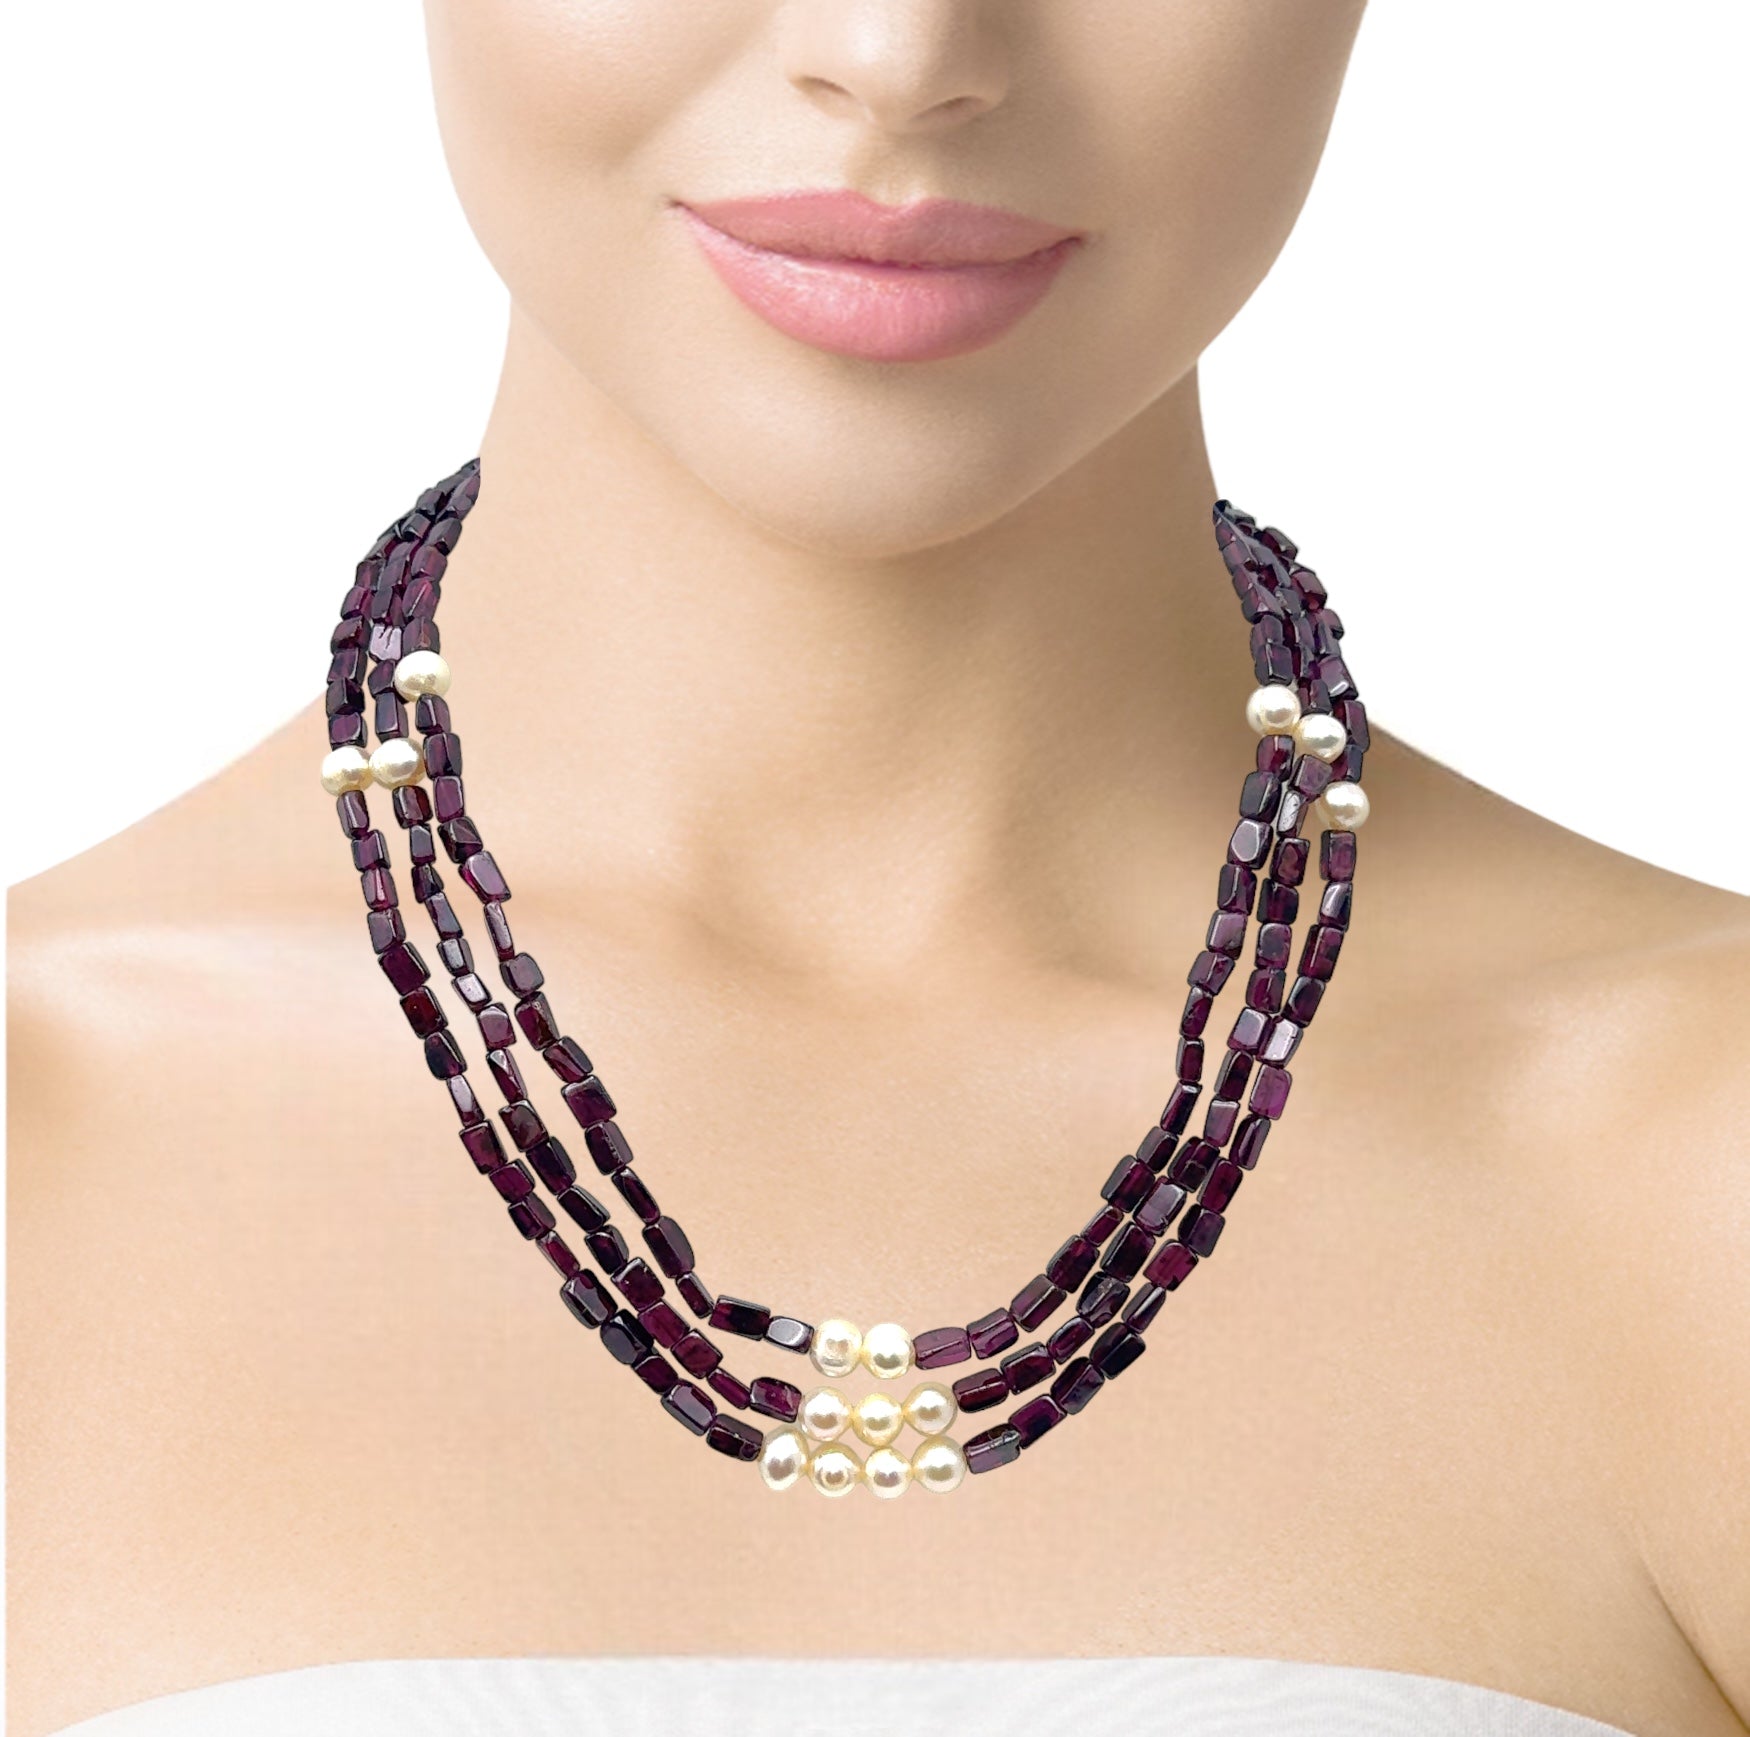 Natural Handmade Necklace 16-18inch Flat Rectangle Garnet Pearls Gem Beads Jewelry